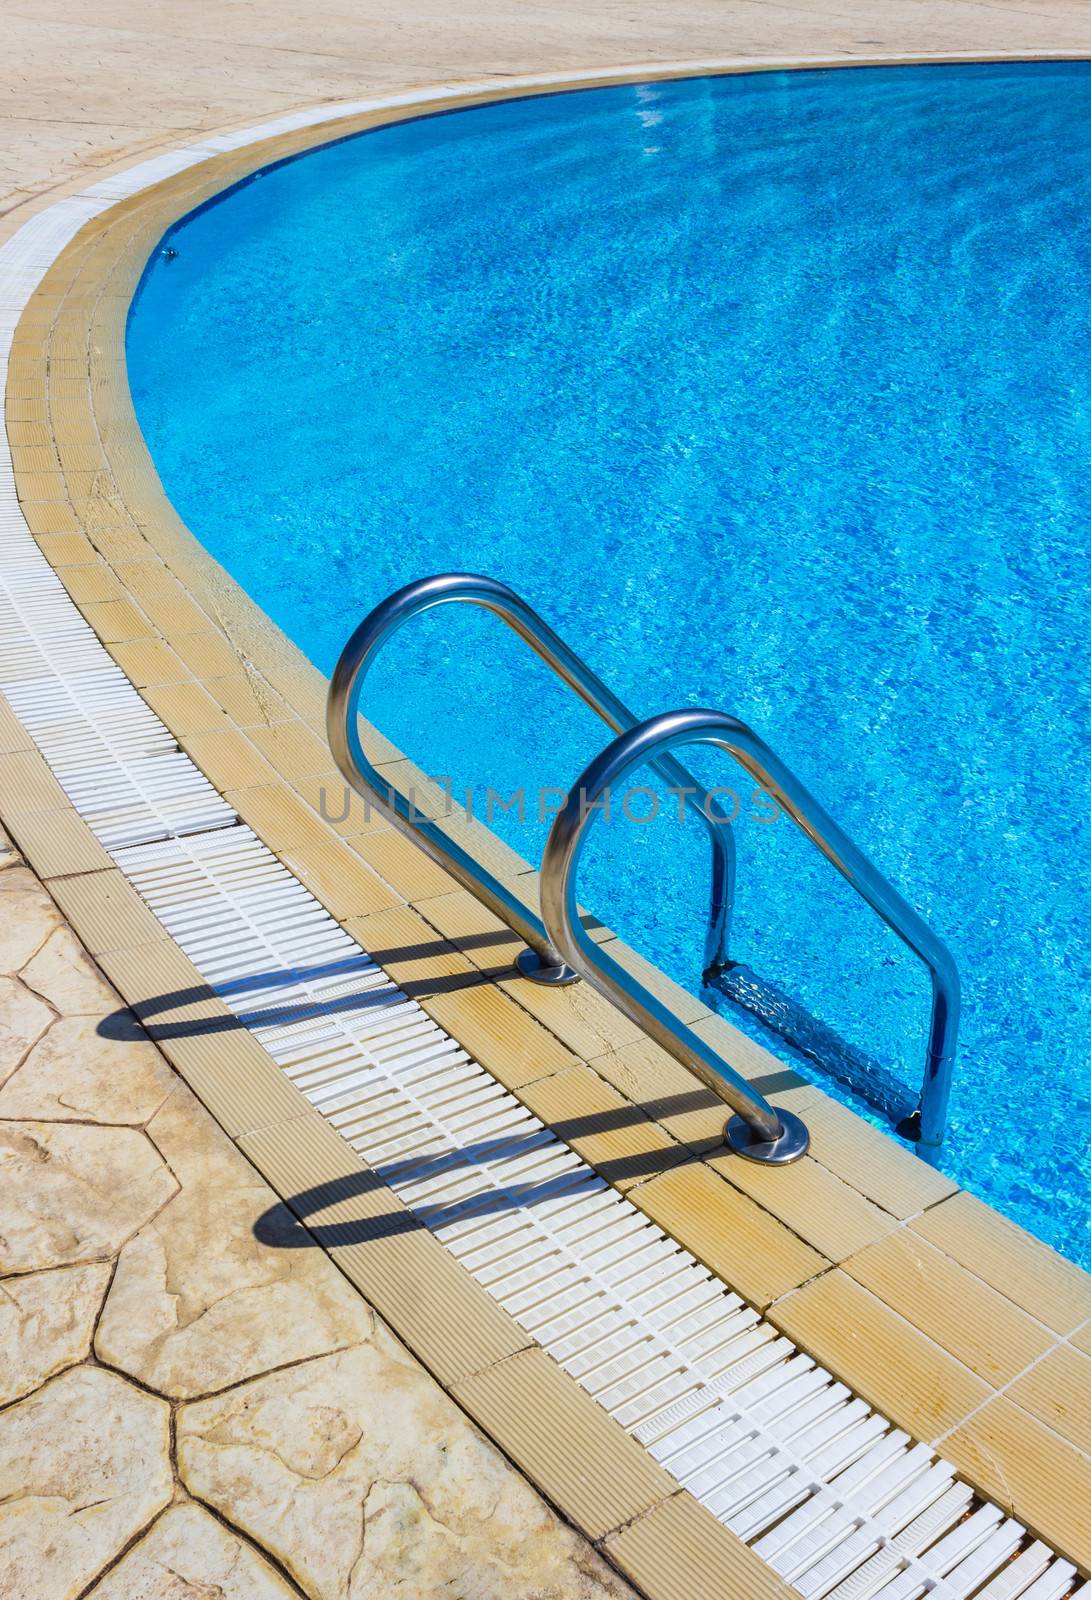 Grab bars ladder in the swimming pool by oleg_zhukov